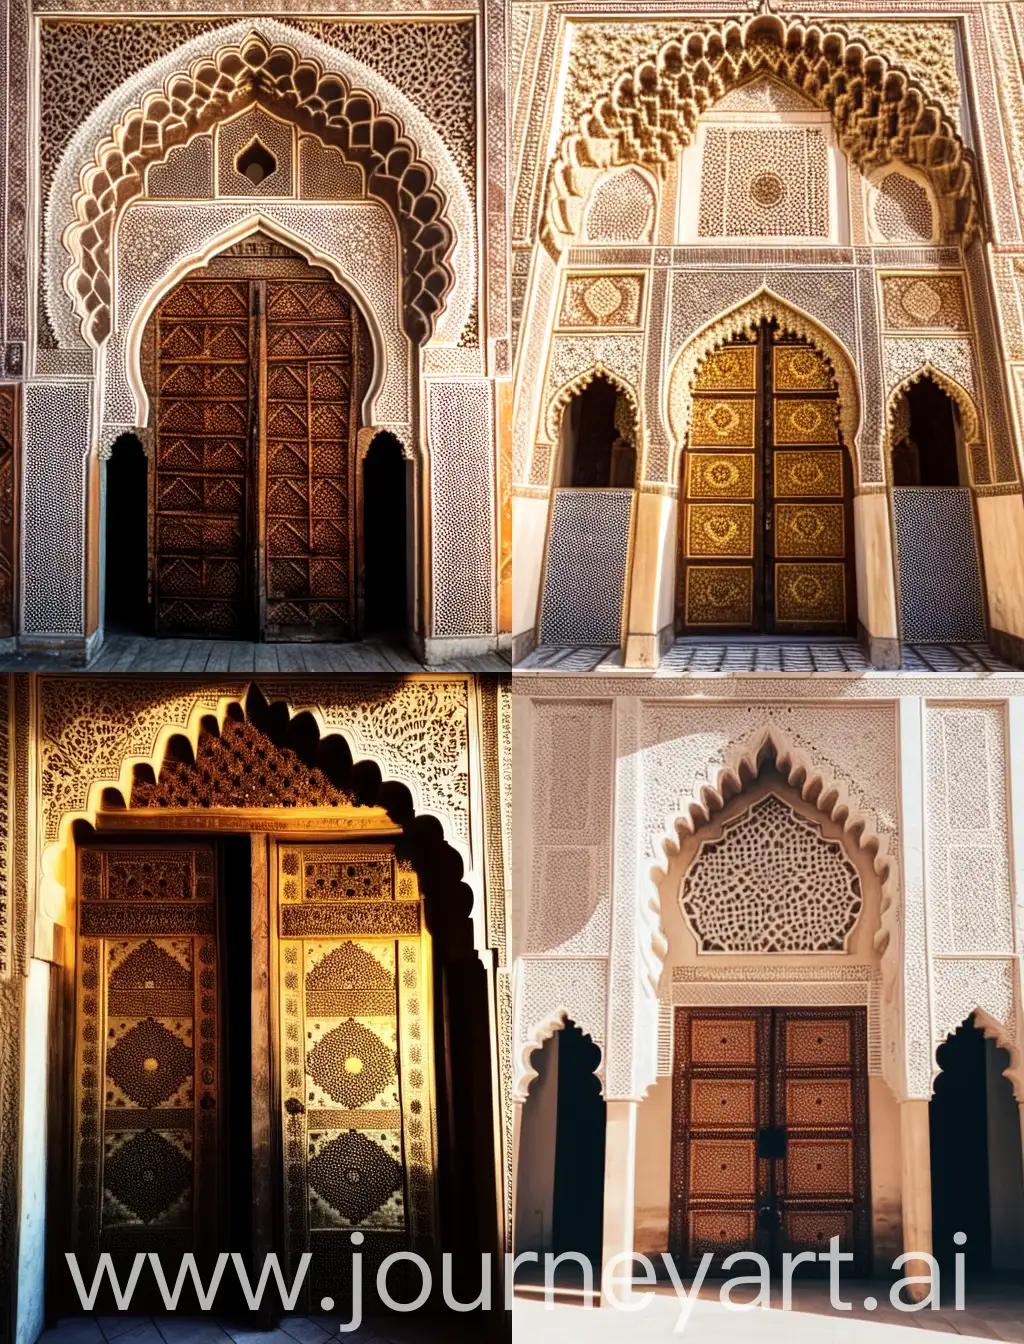 Ancient-Mosque-Courtyard-Illuminated-Islamic-Doors